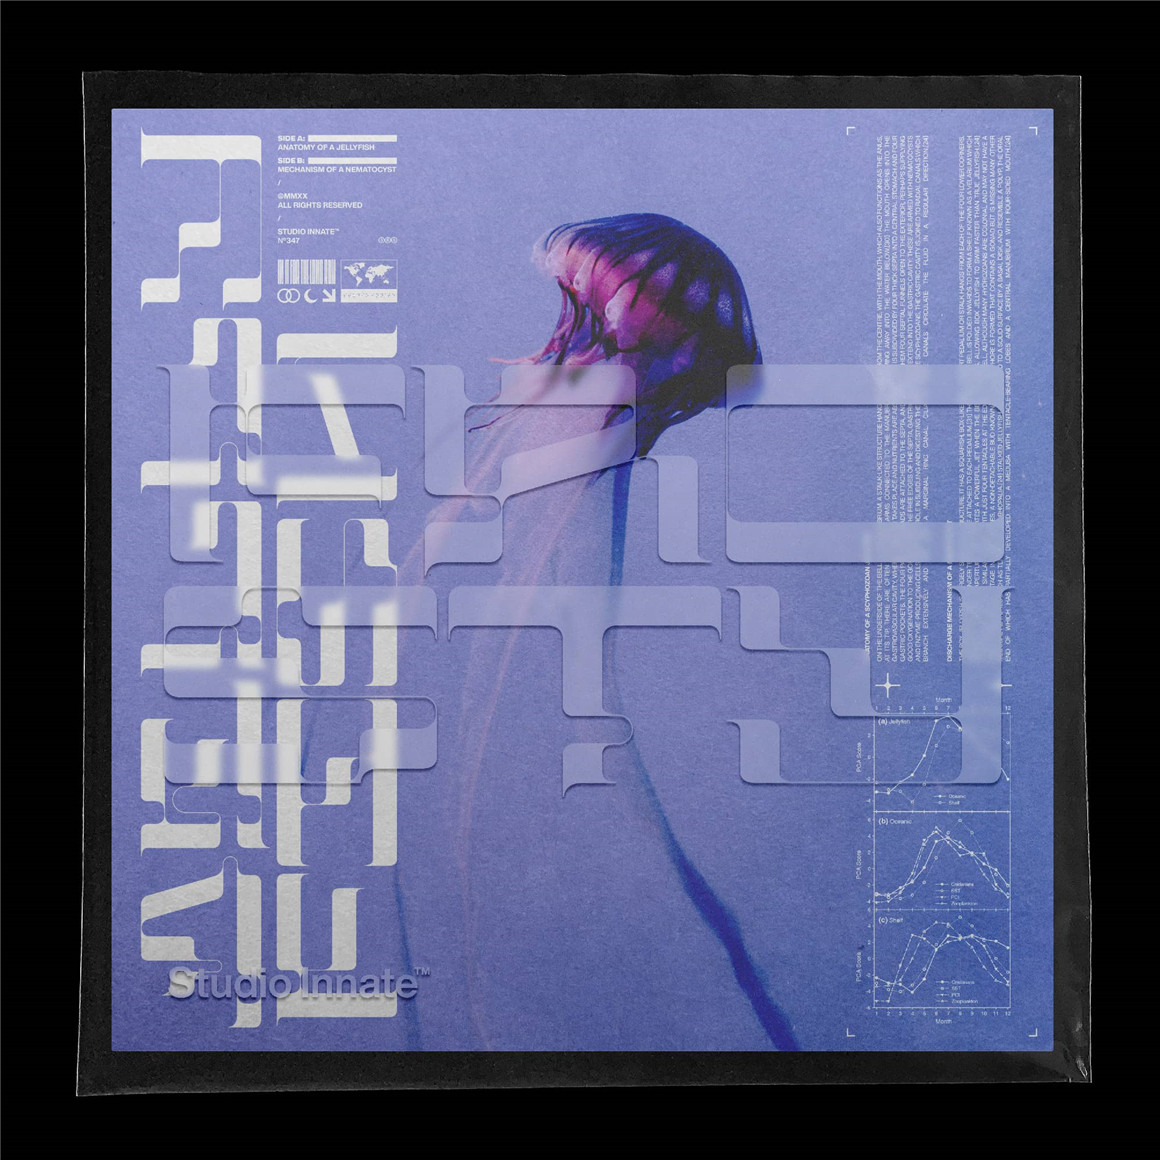 Studio Innate 潮流磨砂音乐专辑CD光盘包装纸袋贴纸设计展示贴图样机模板素材 Frosted Disc（6861）图层云1